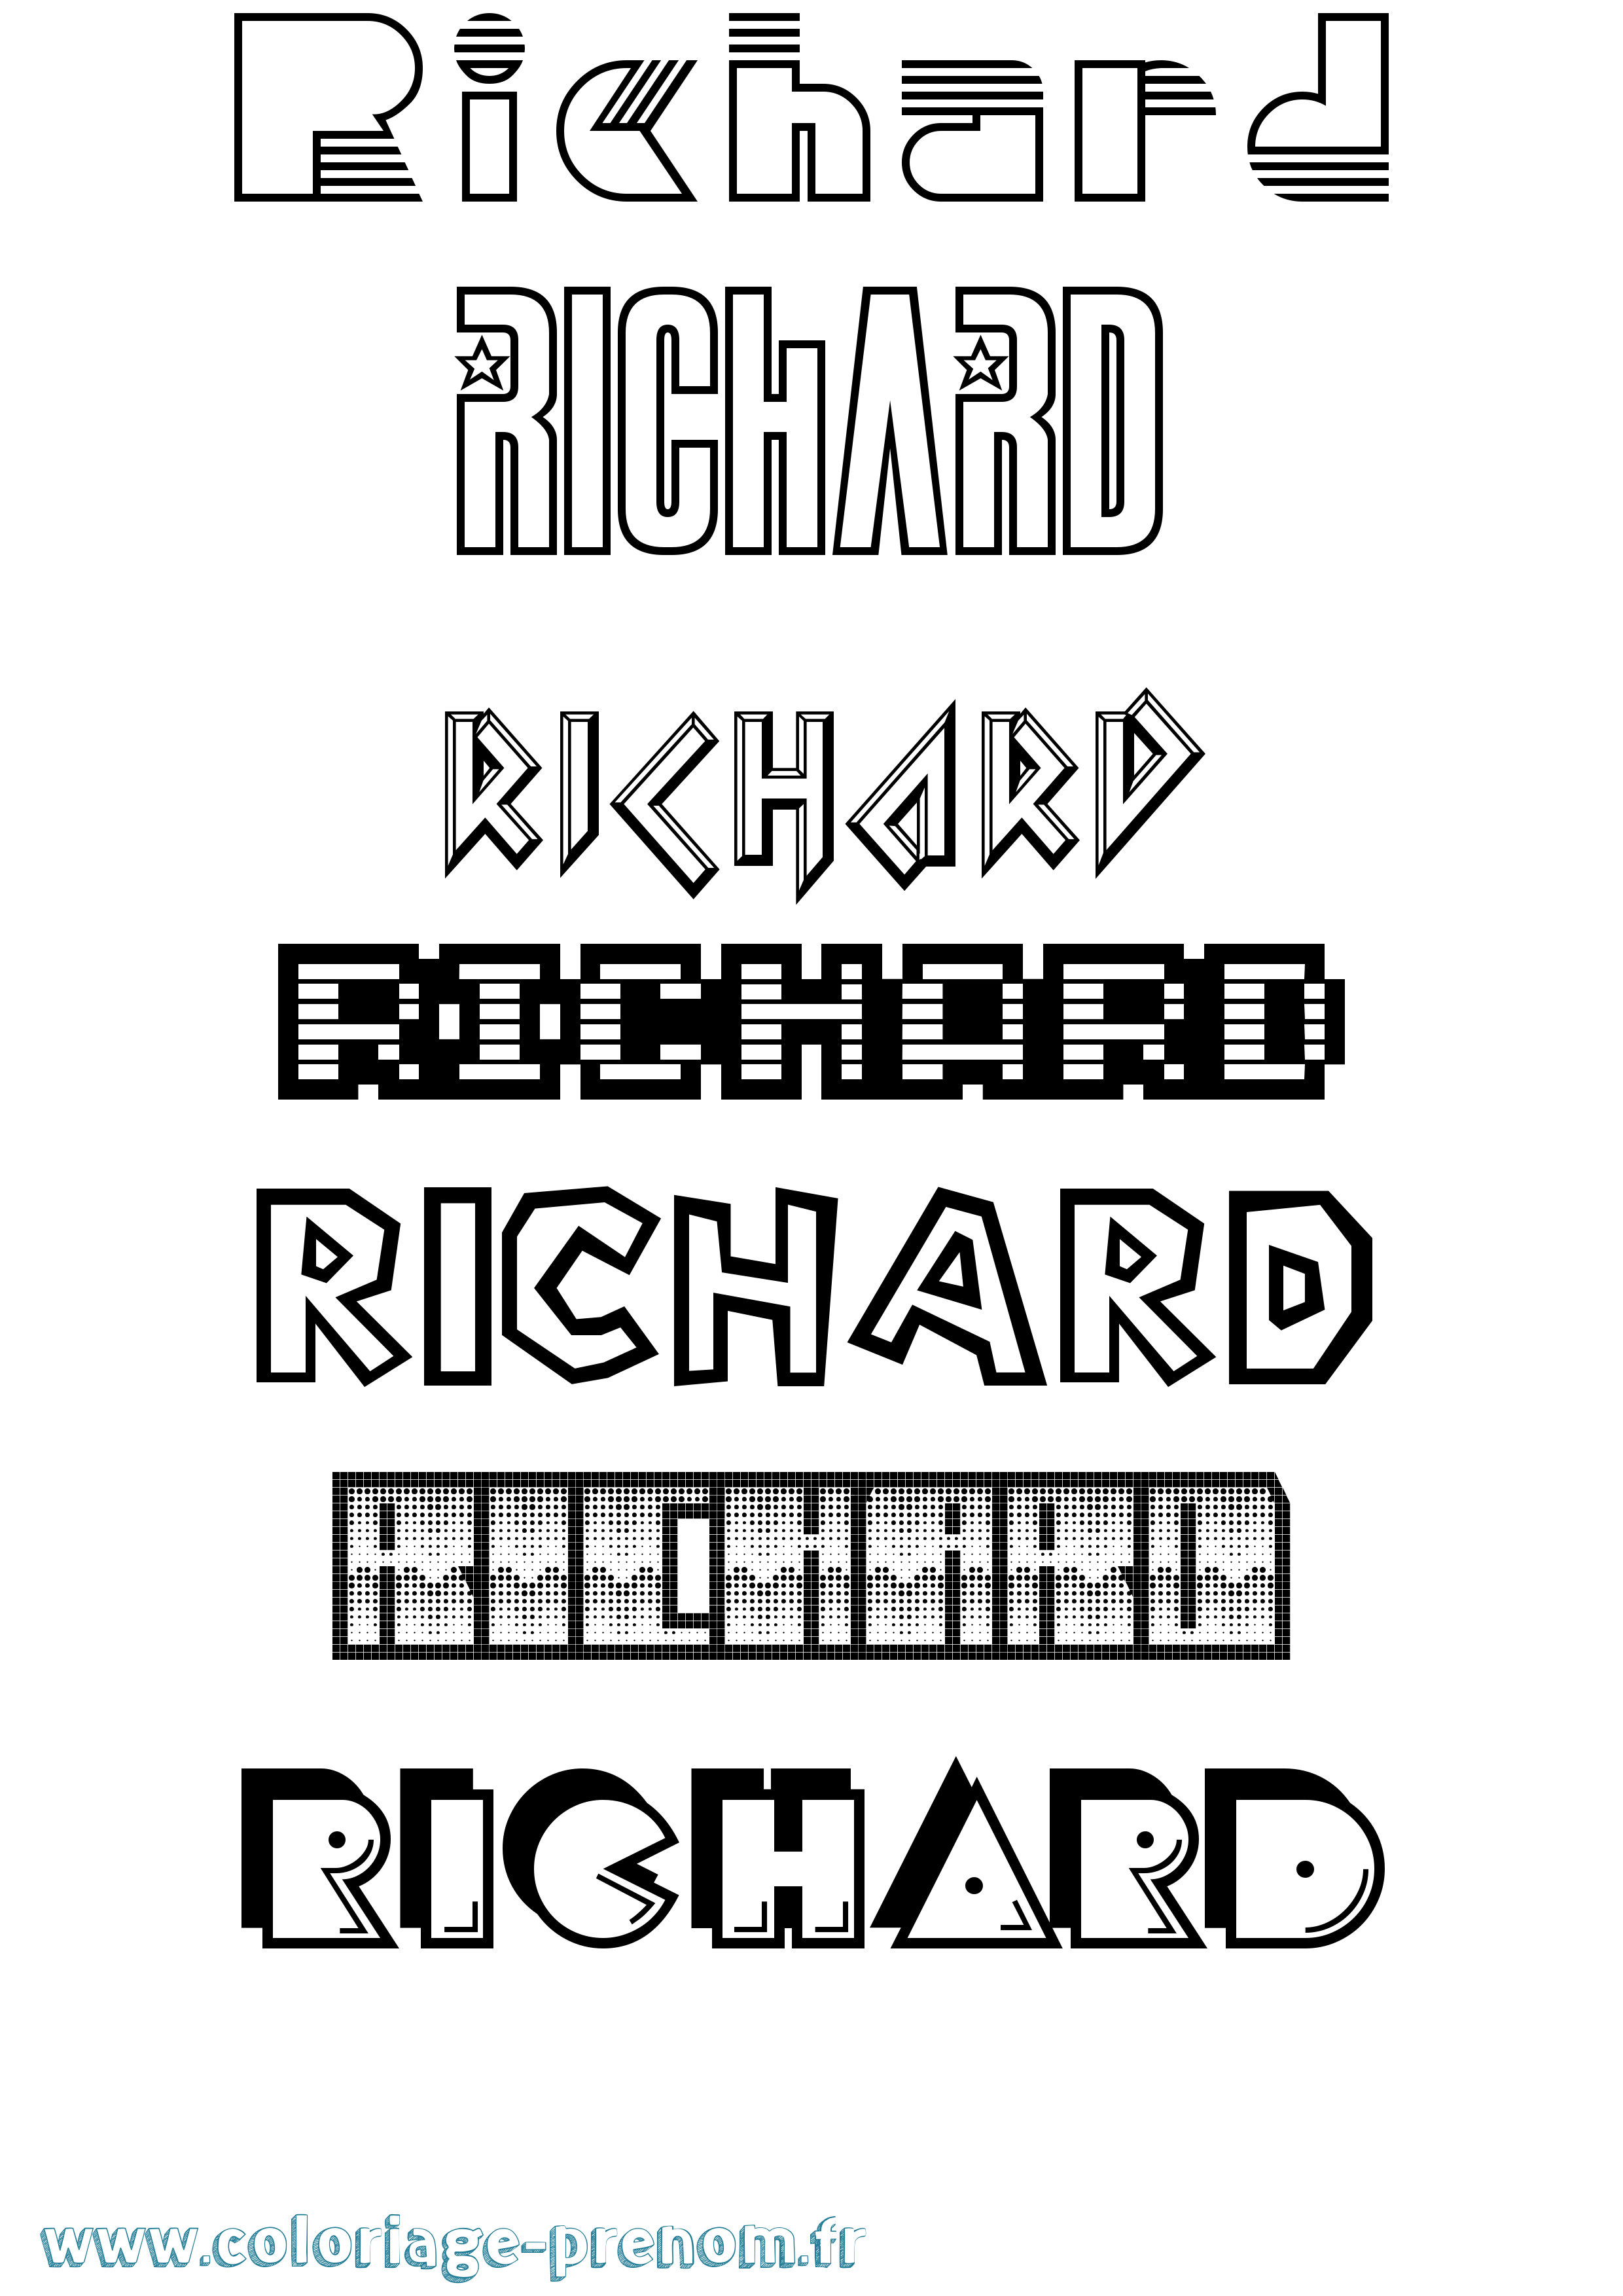 Coloriage prénom Richard